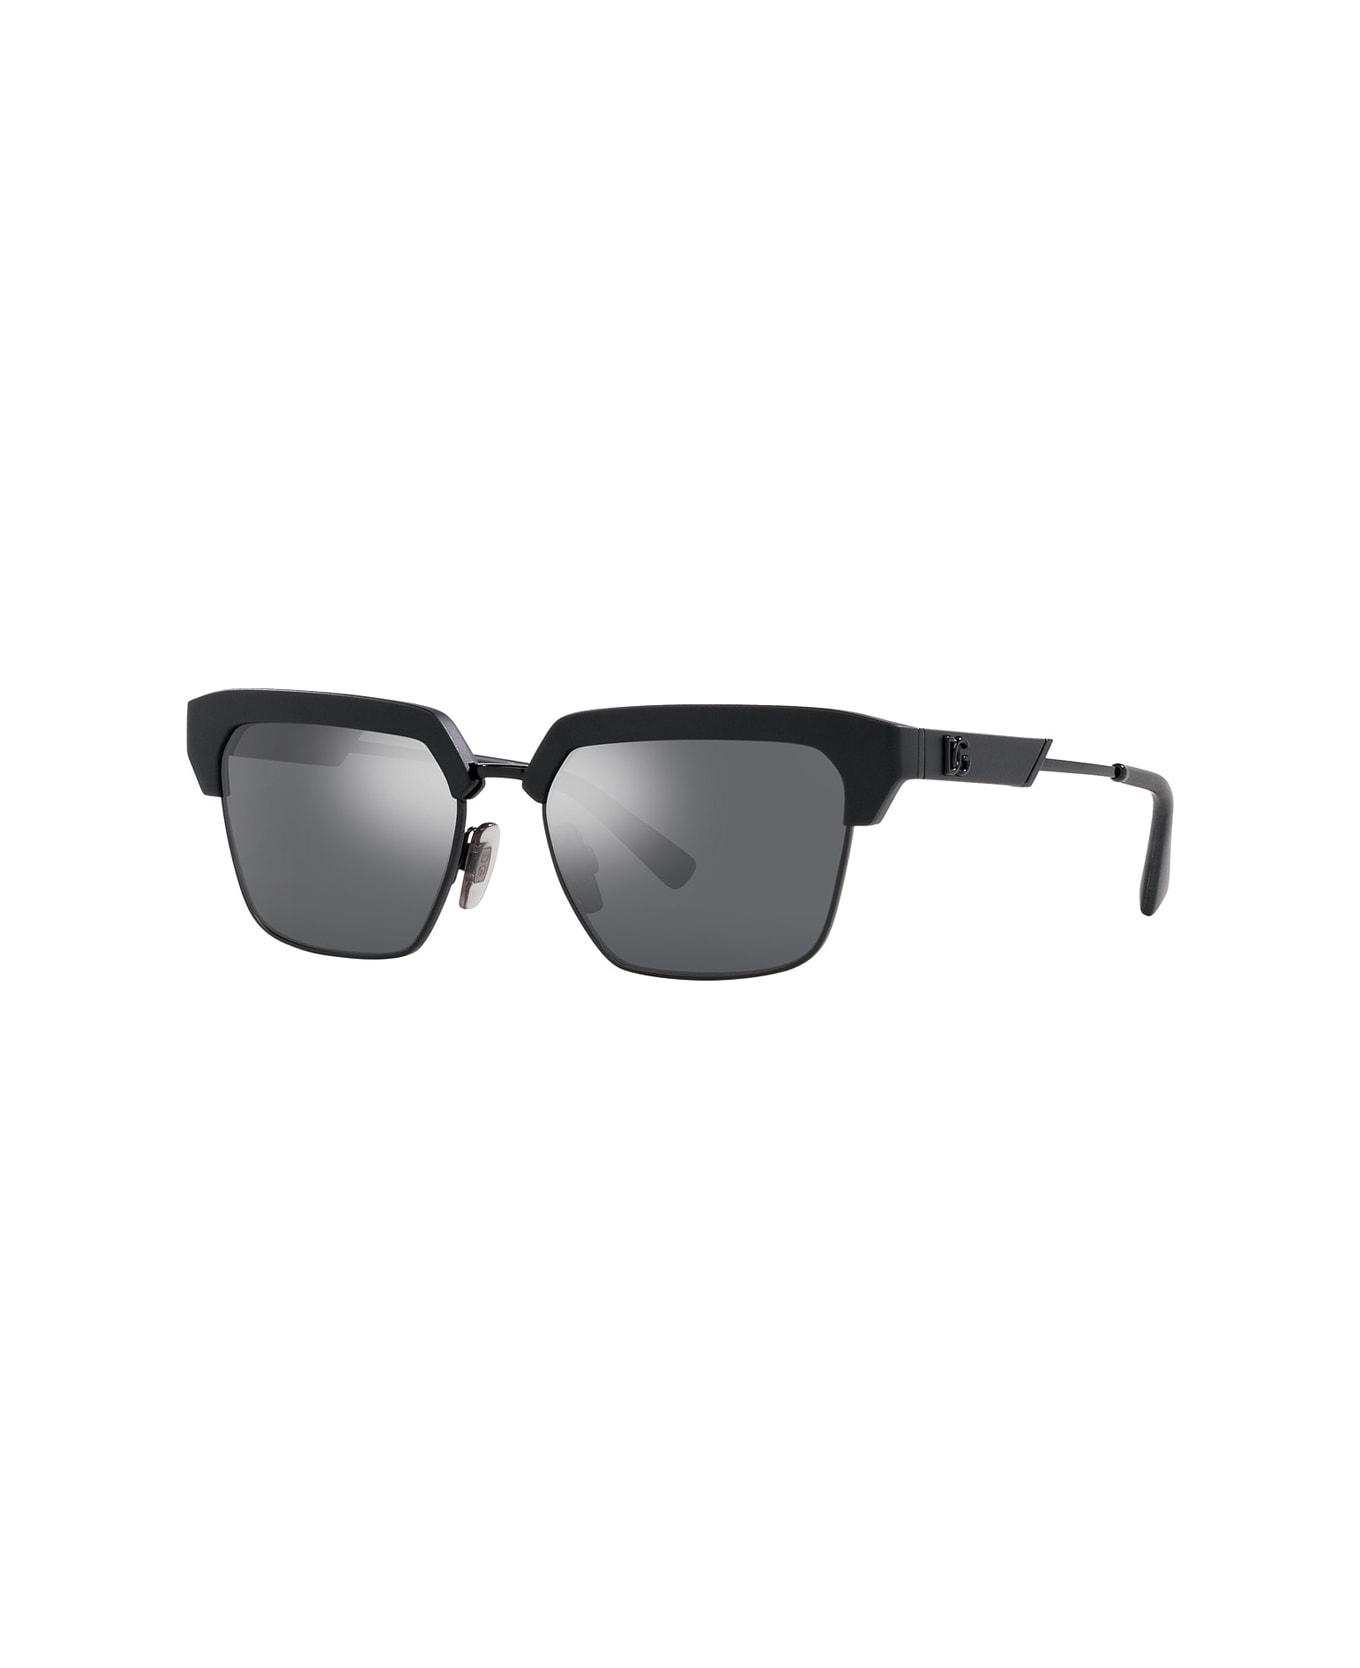 Dolce & Gabbana Eyewear Dg6185 25256g Sunglasses - Nero